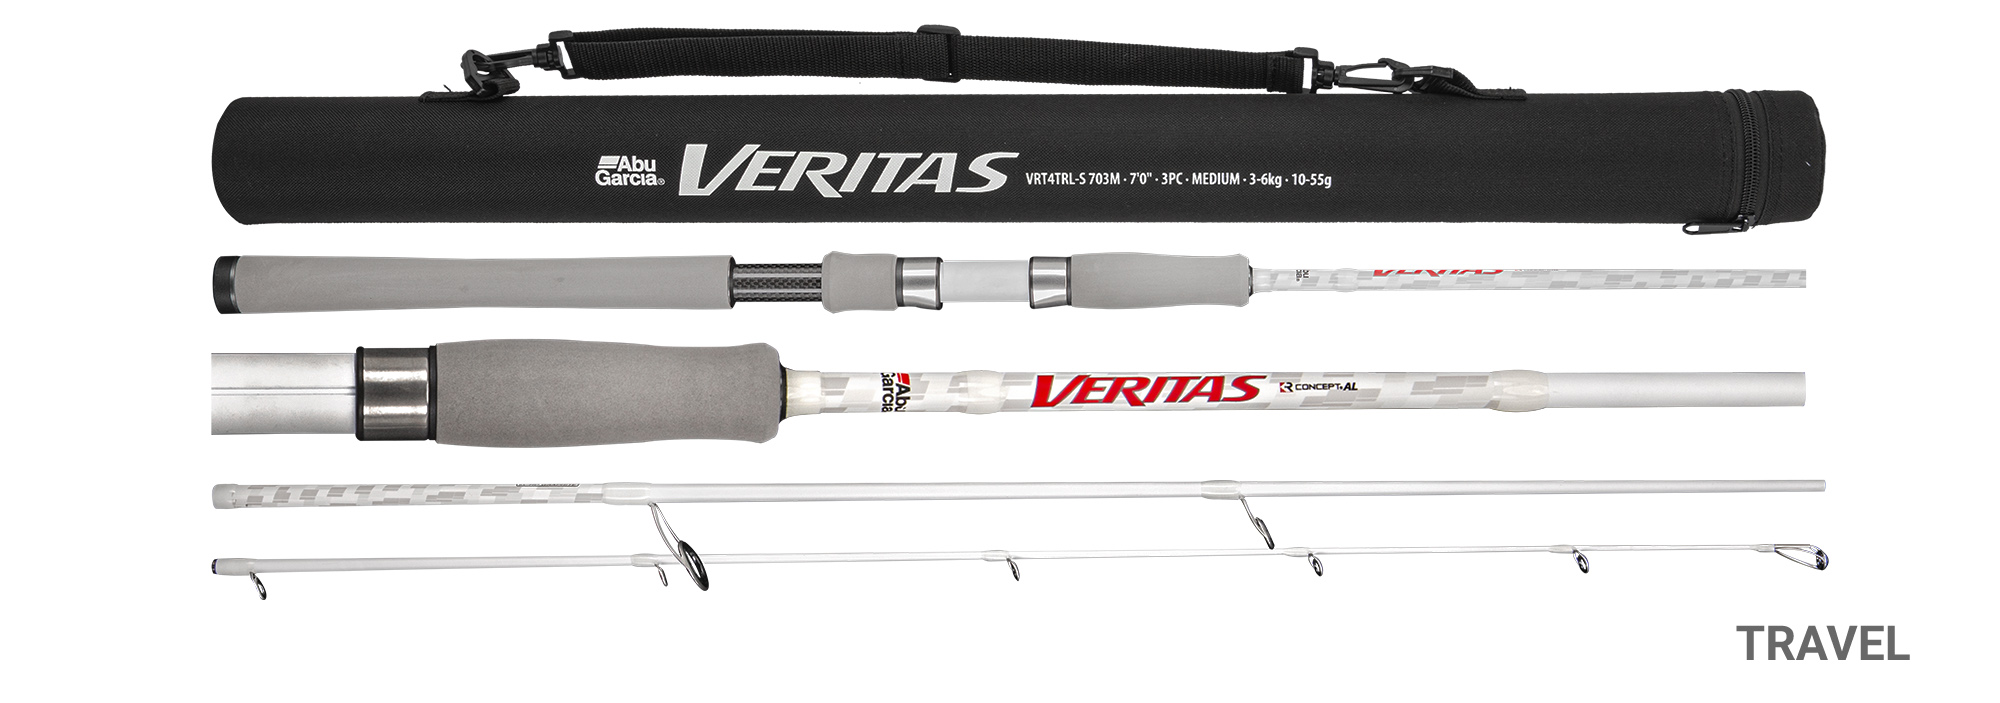 Abu Garcia Veritas 3.0 Spinning Rod 6'3" 3-6kg 1pc Fishing VRT3-S 631ML 